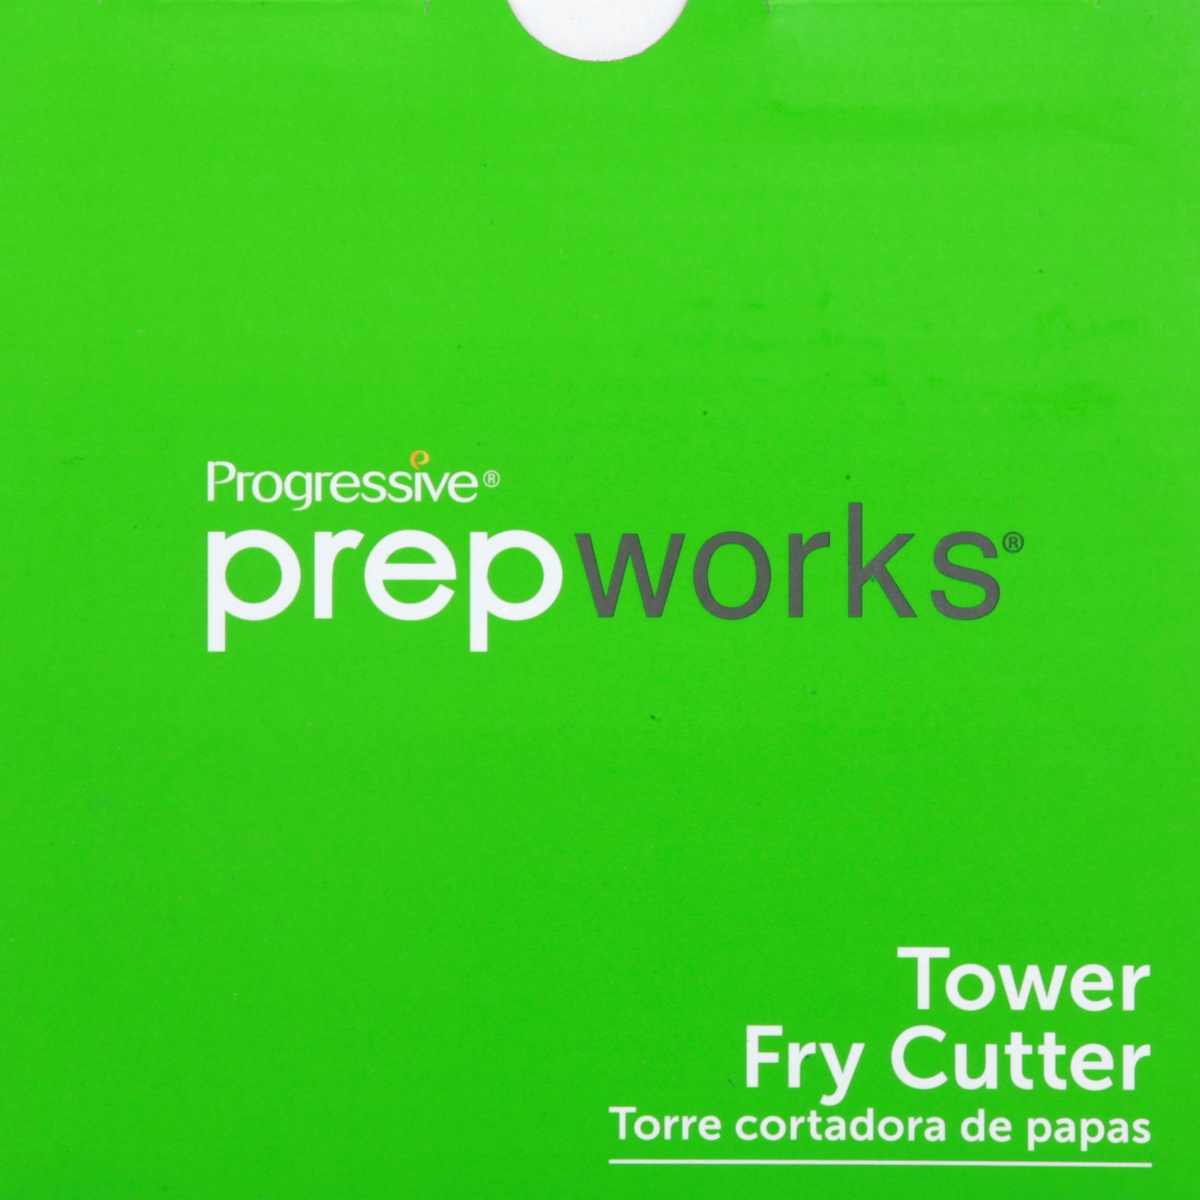 Progressive Prepworks Tower Fry Cutter